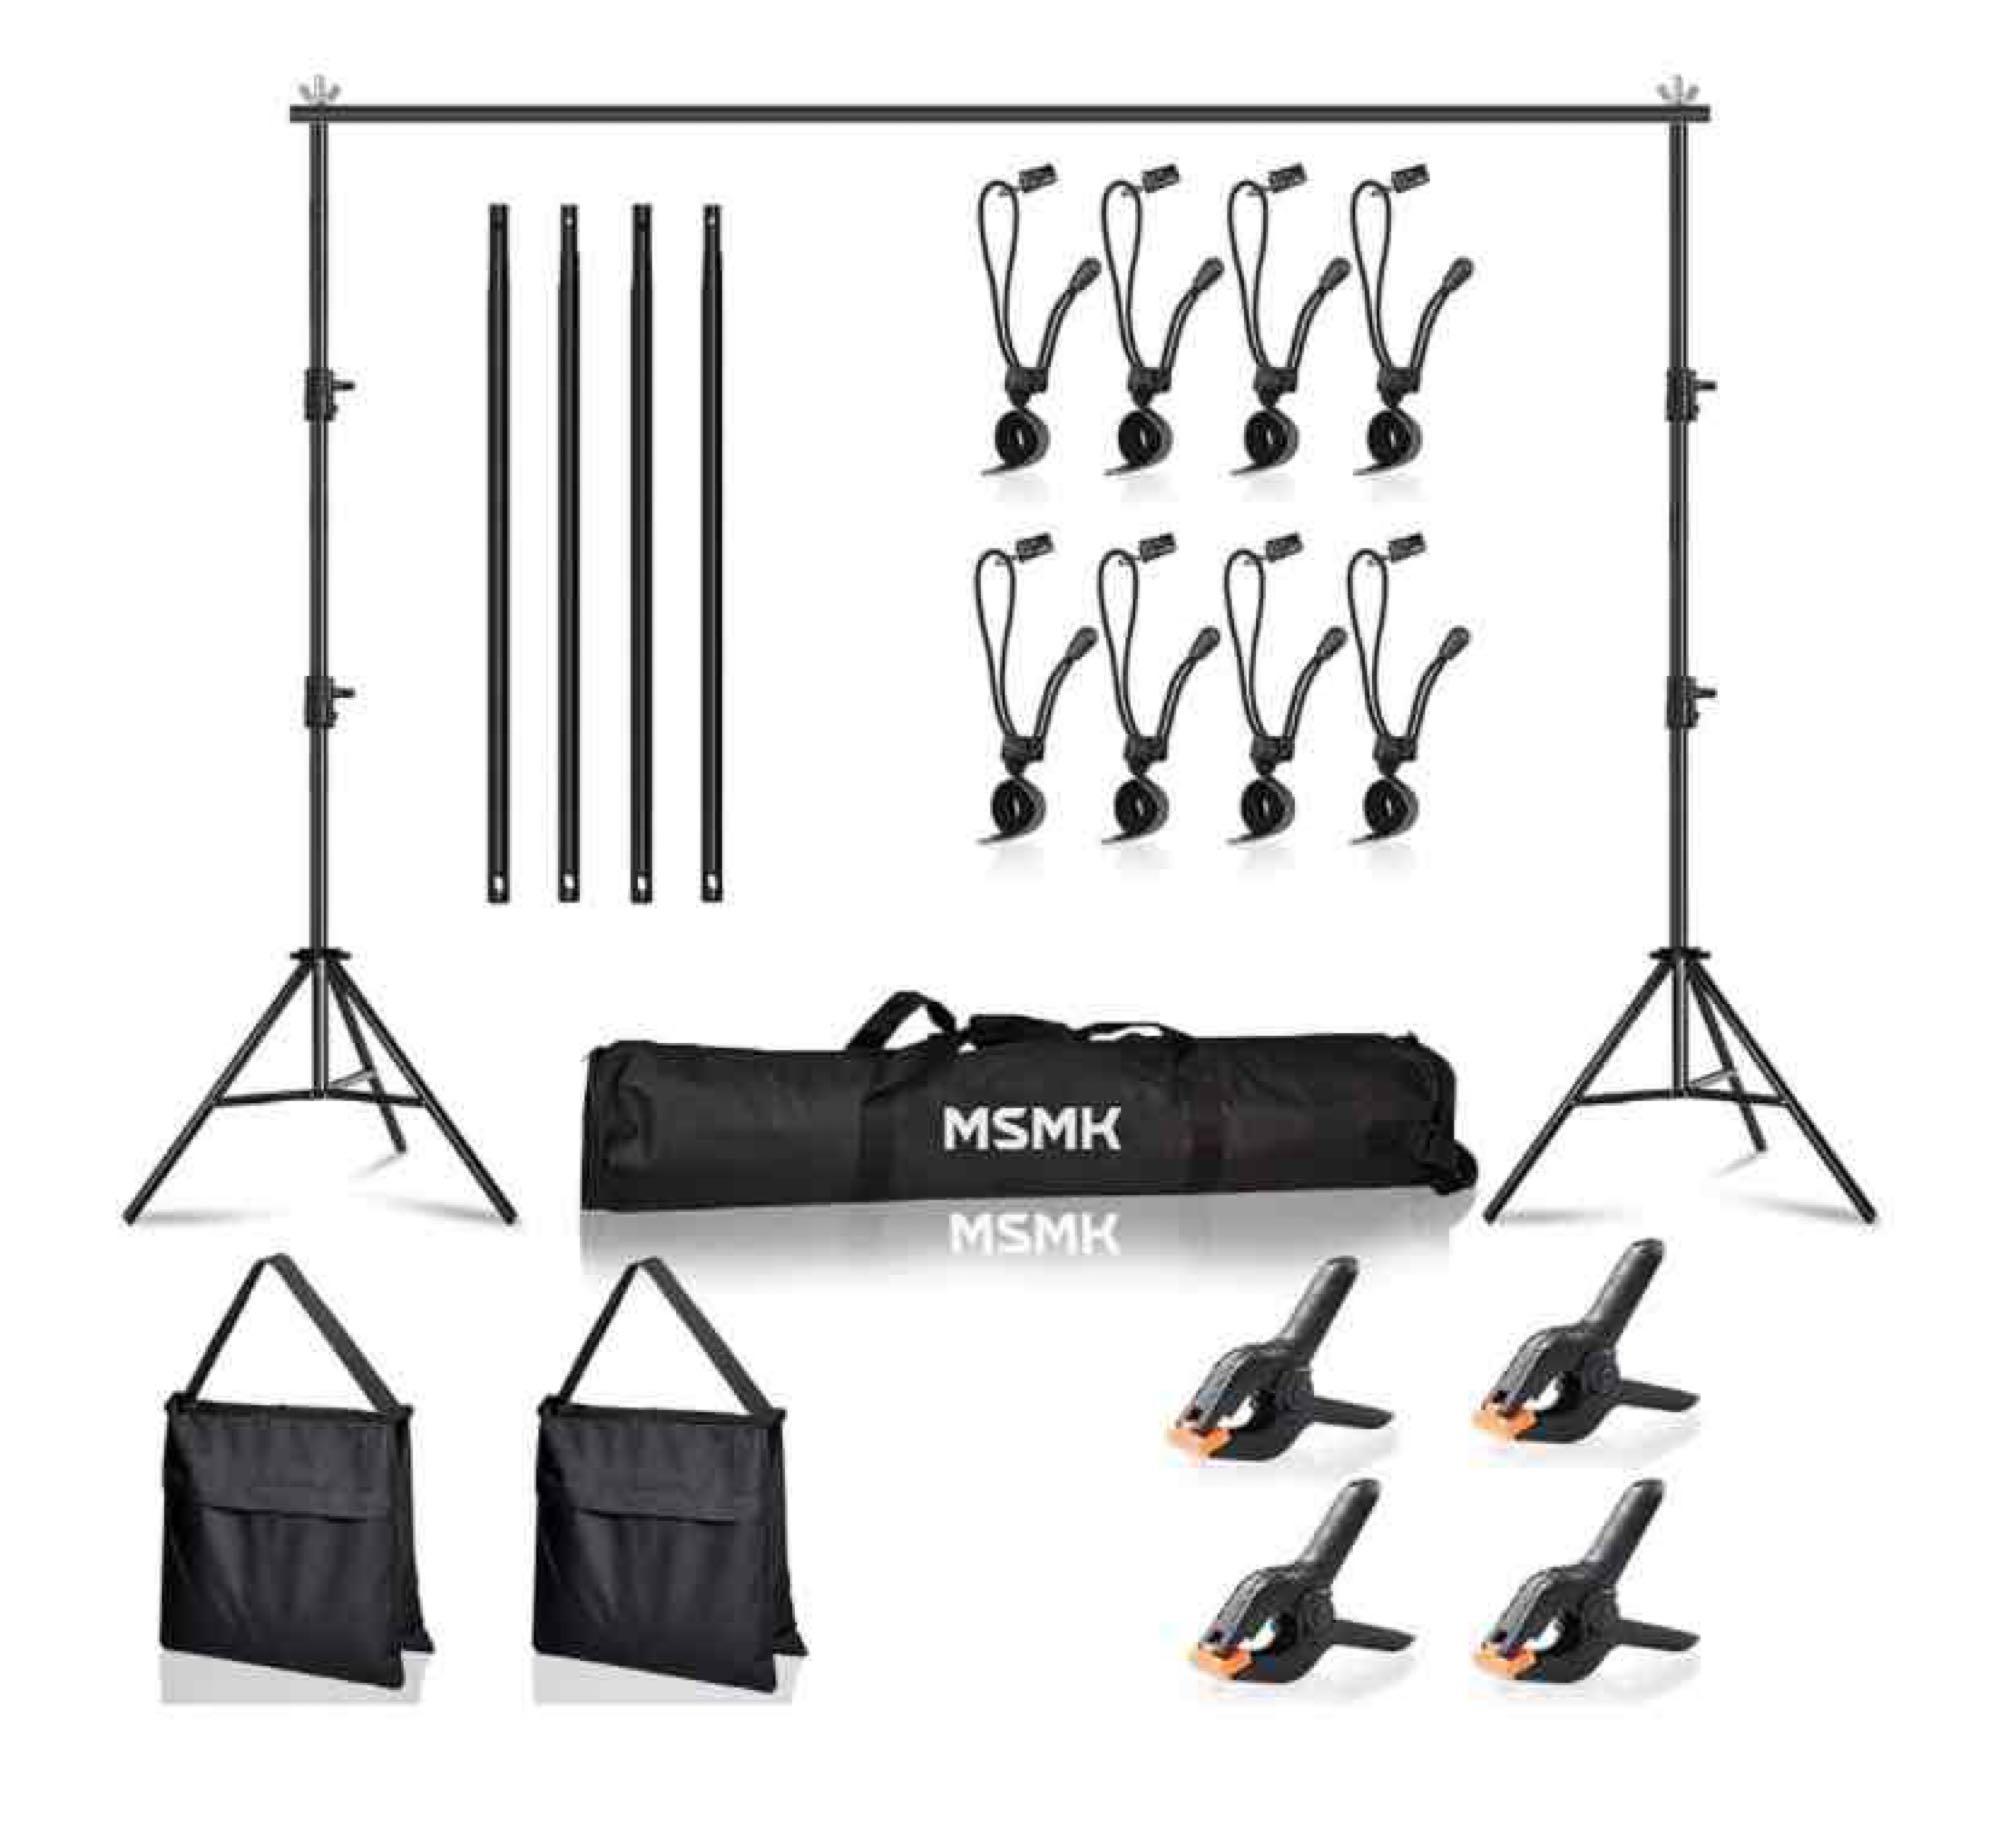 MsMk Photo Video Studio Backdrop Stand 6.5ft x 10ft